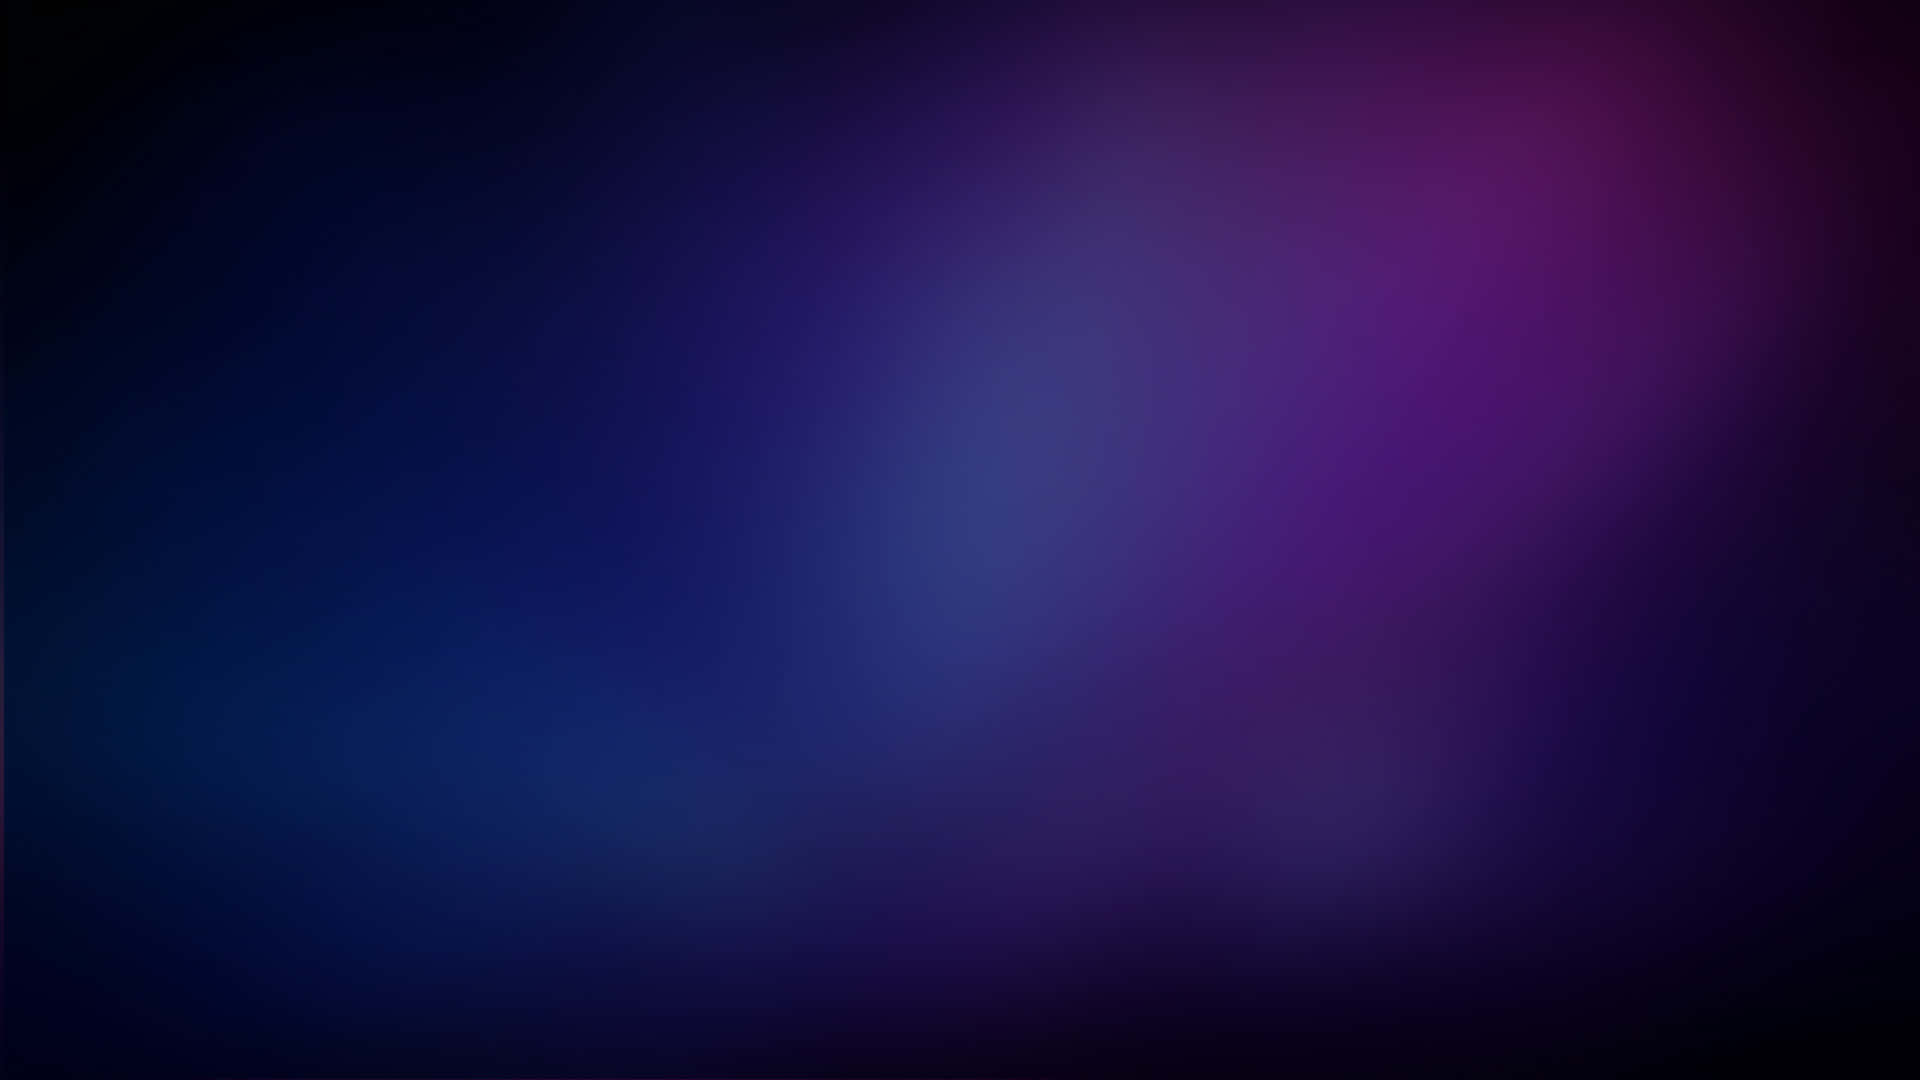 Sumérgeteen Una Ensoñadora Neblina Purpura De Colores Fondo de pantalla